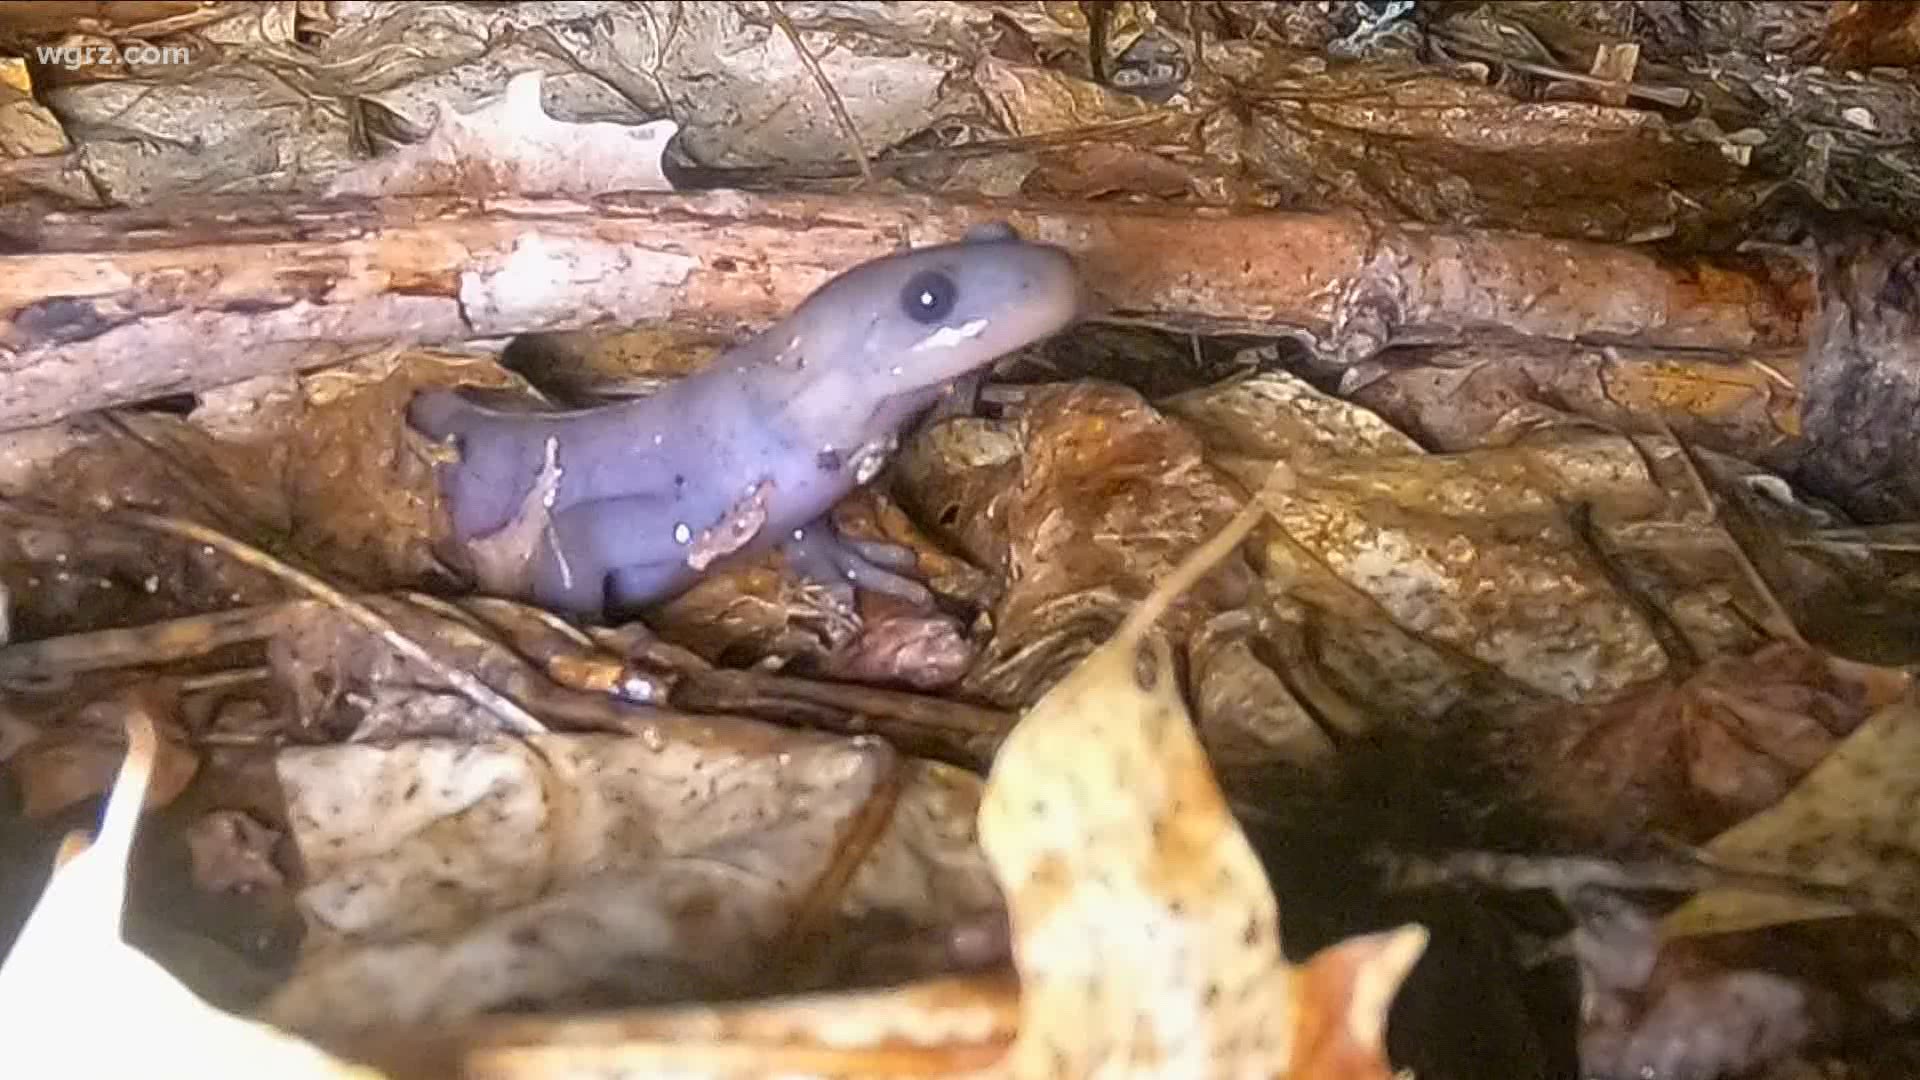 Vernal pools provide the perfect habitat for salamanders emerging from winter hibernation.